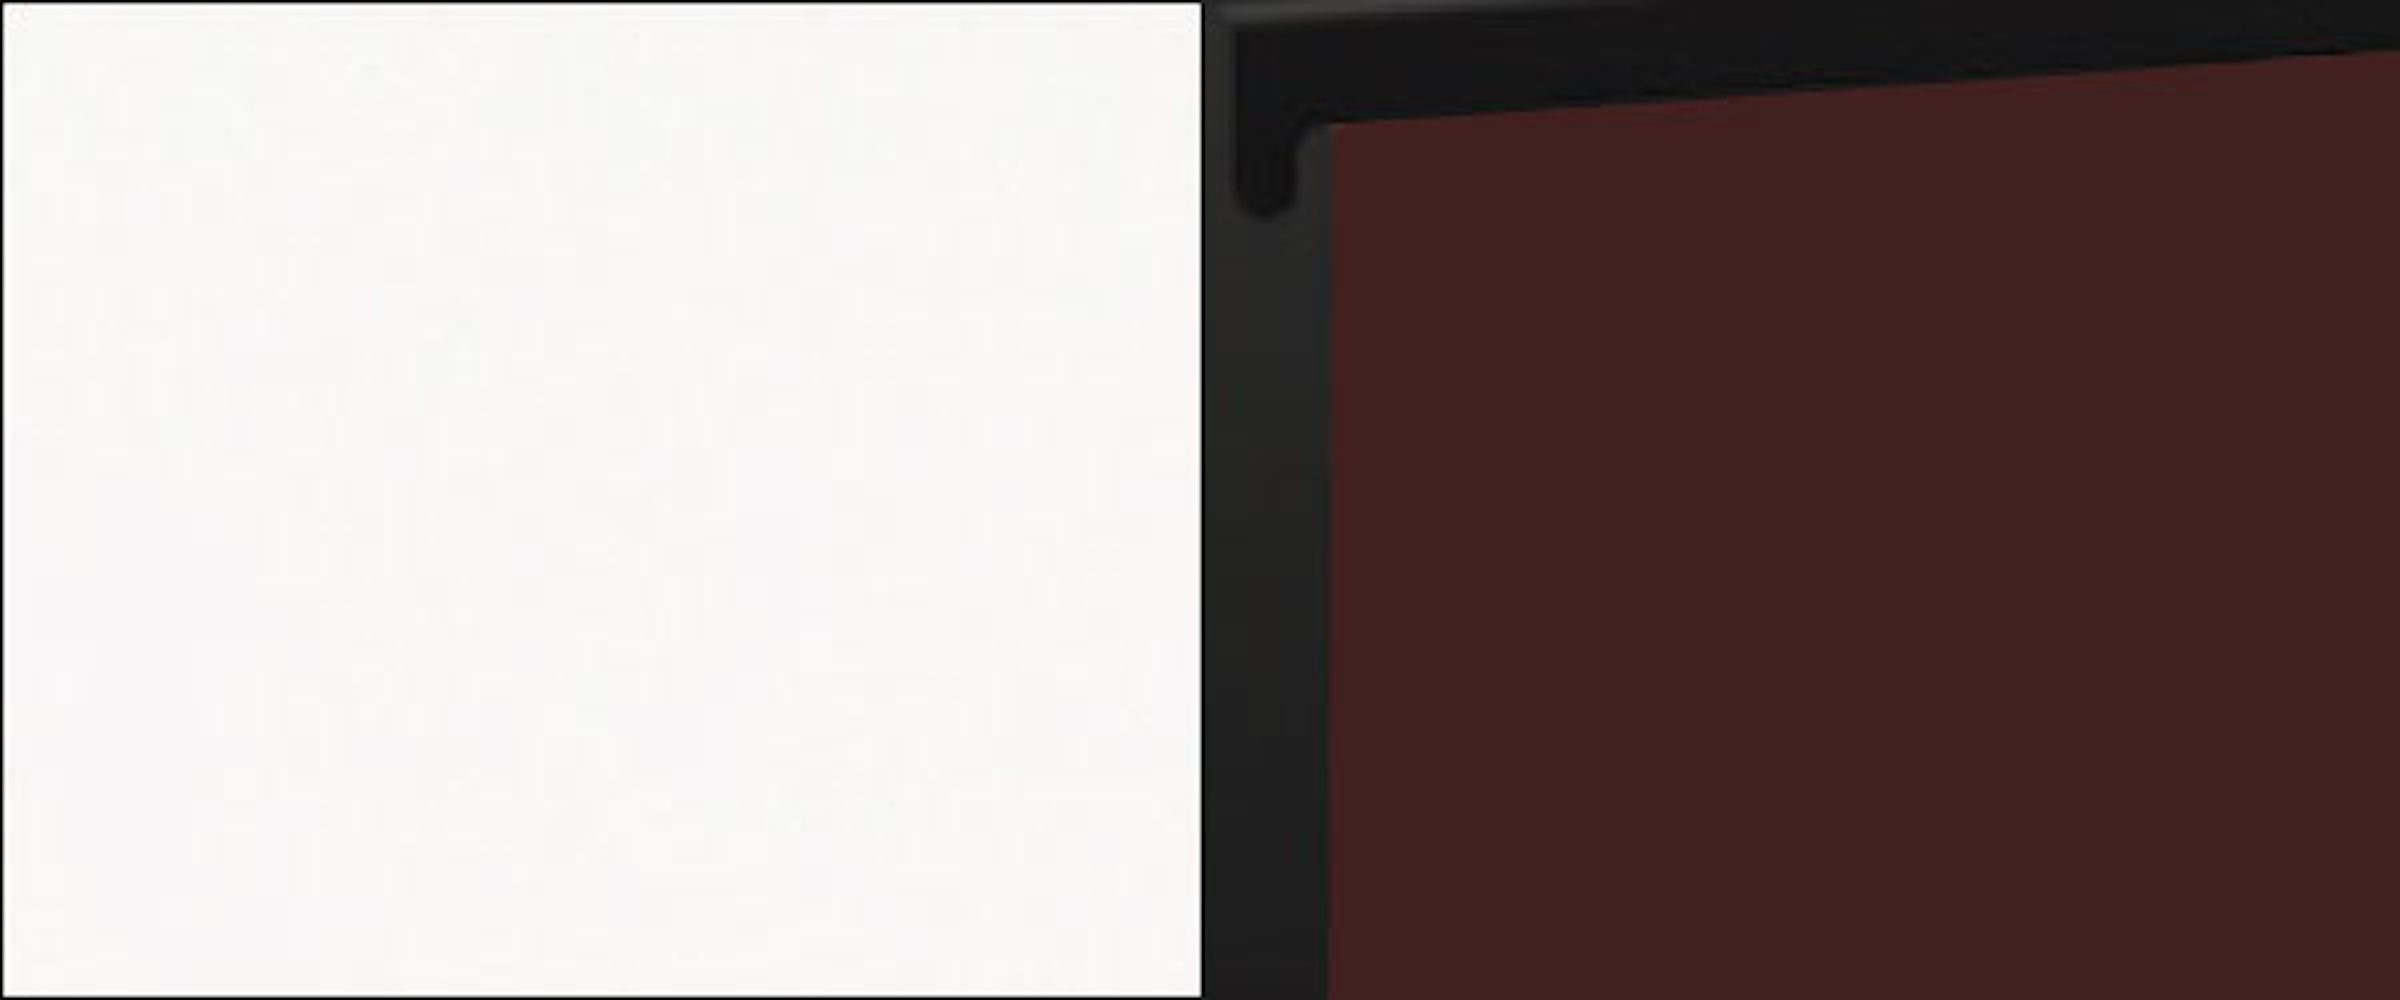 Kühlumbauschrank Front-, rubinrot grifflos 2-türig Ausführung Velden super 60cm & wählbar Korpusfarbe Feldmann-Wohnen matt